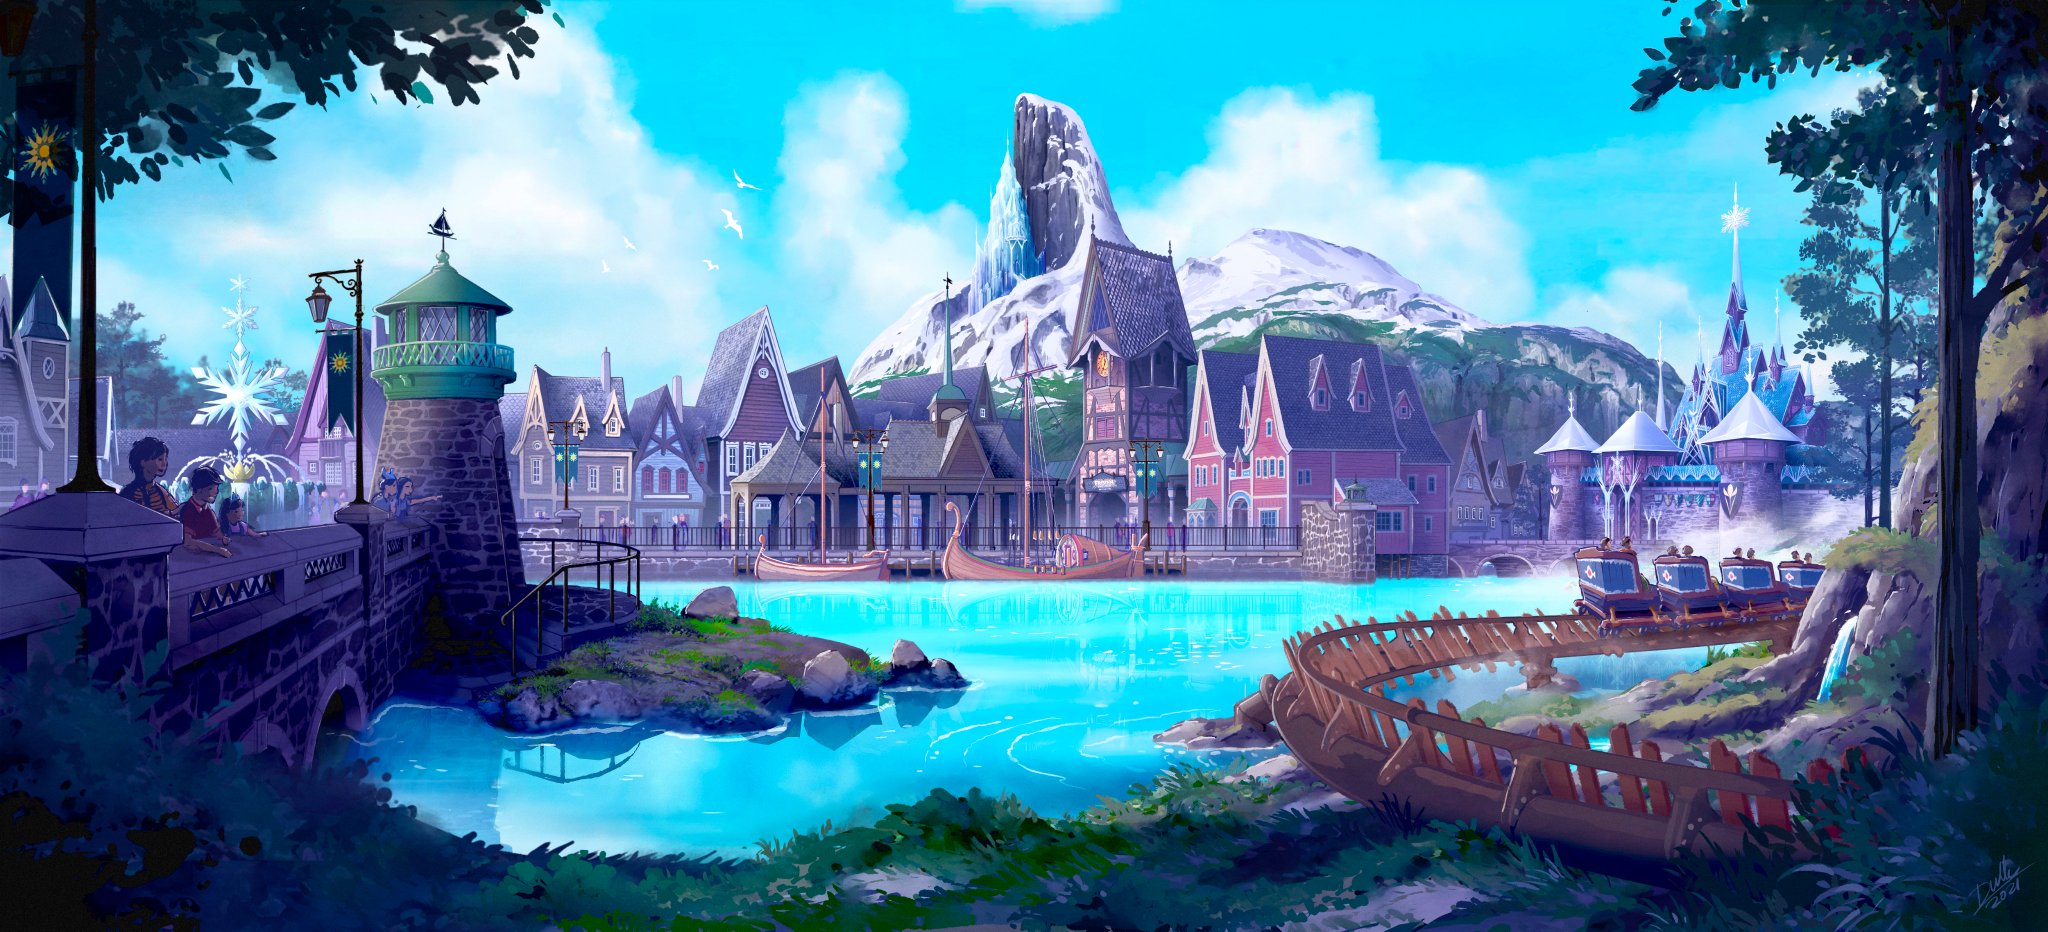 New Details Revealed for ‘Frozen’ Themed Lands at Disneyland Paris, Tokyo DisneySea and Hong Kong Disneyland